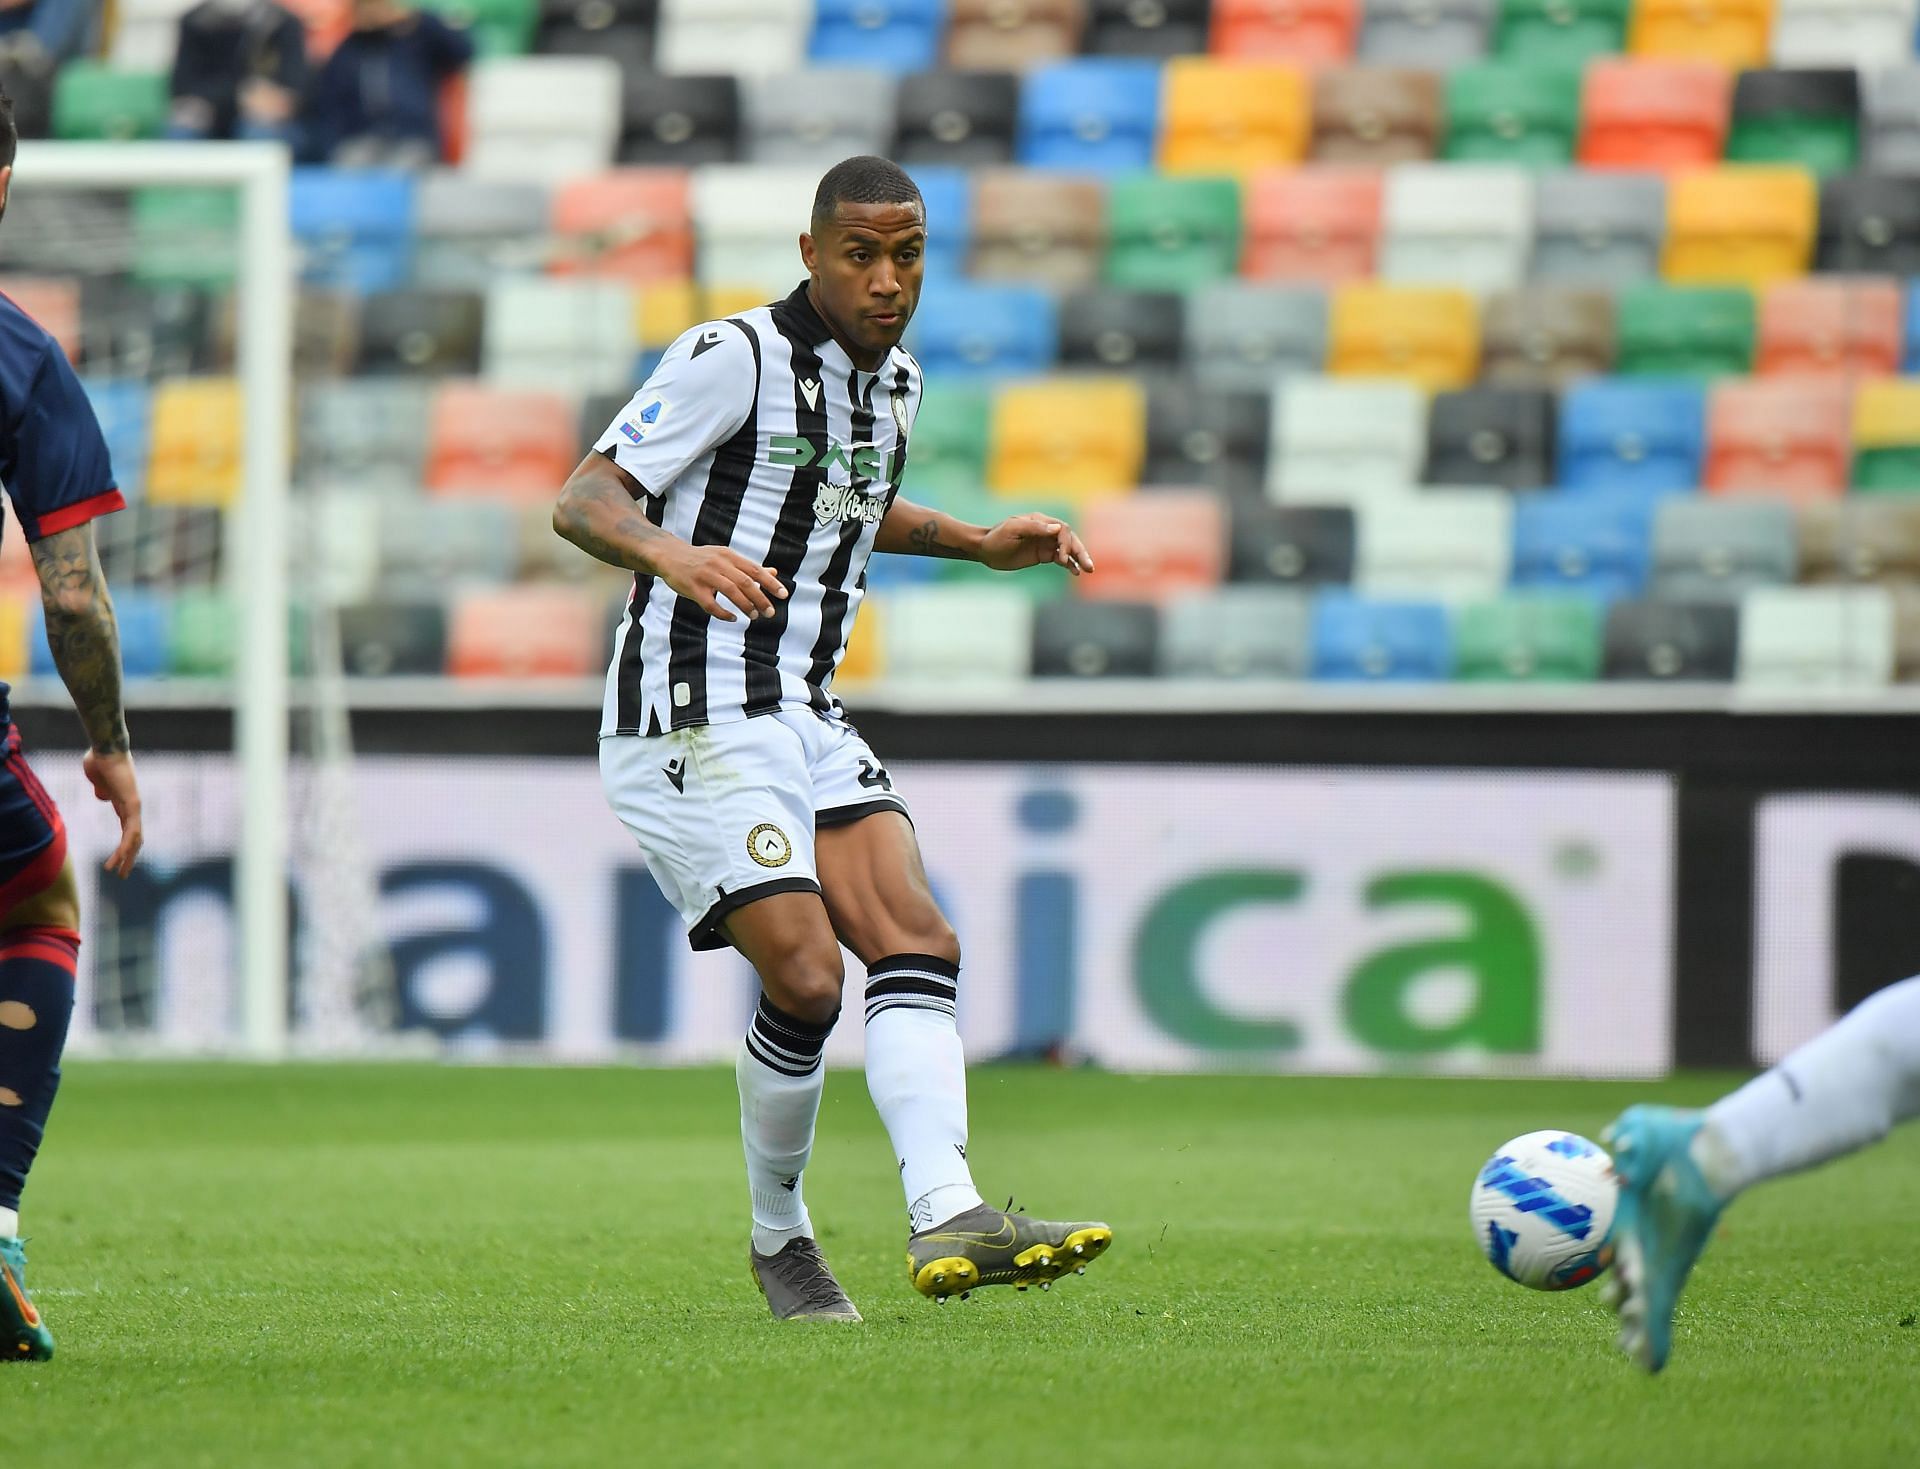 Udinese face last-placed Salernitana on Wednesday